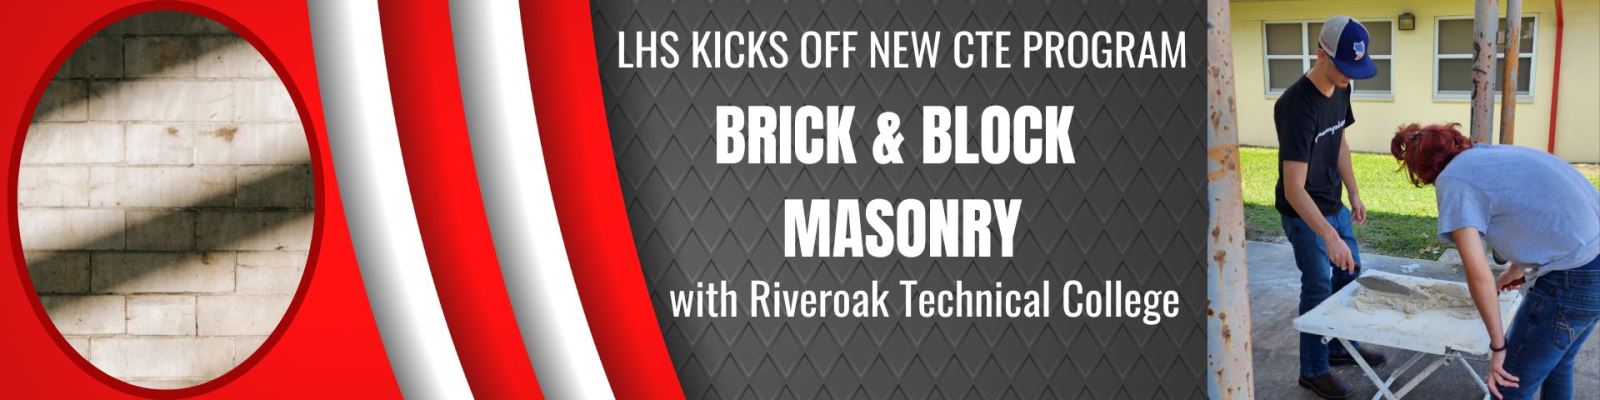 Lafayette kicks off new CTE program, Brick & Block Masonry, with Riveroak Technical College